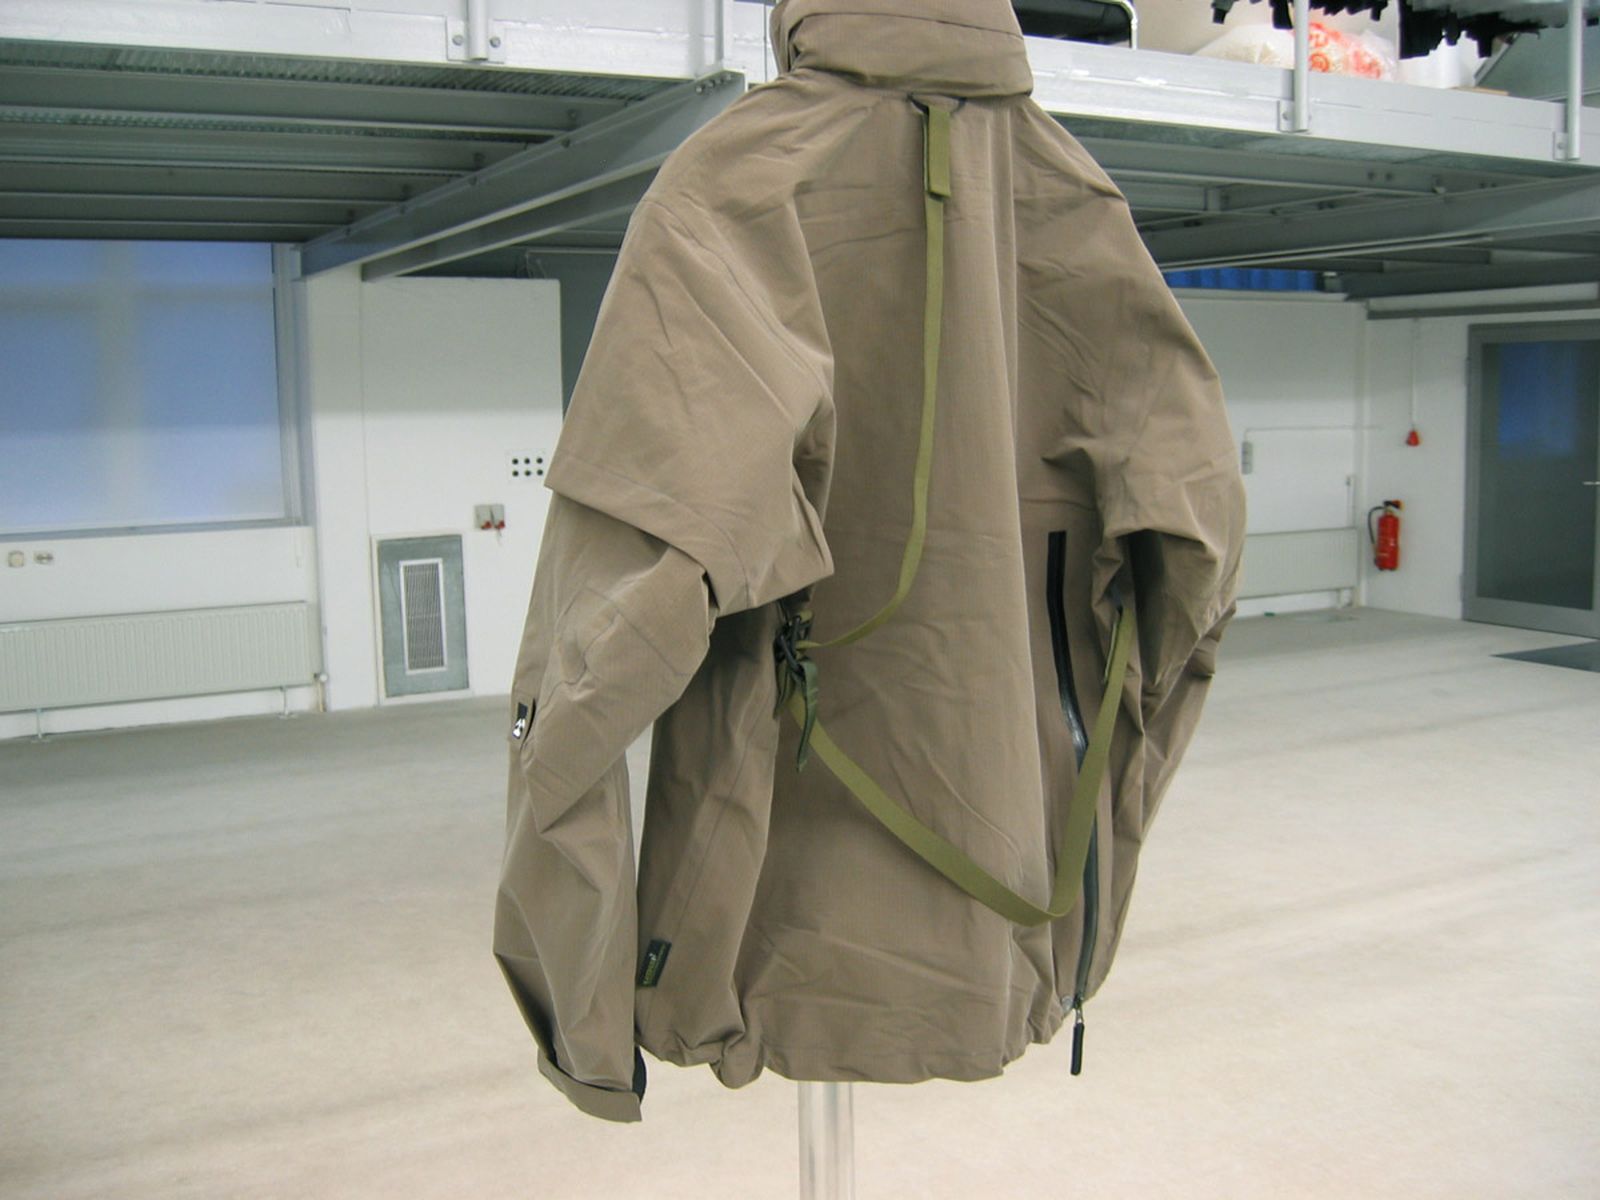 GT-J4 jacket, shot in ACRONYM's old Munich office (2004)